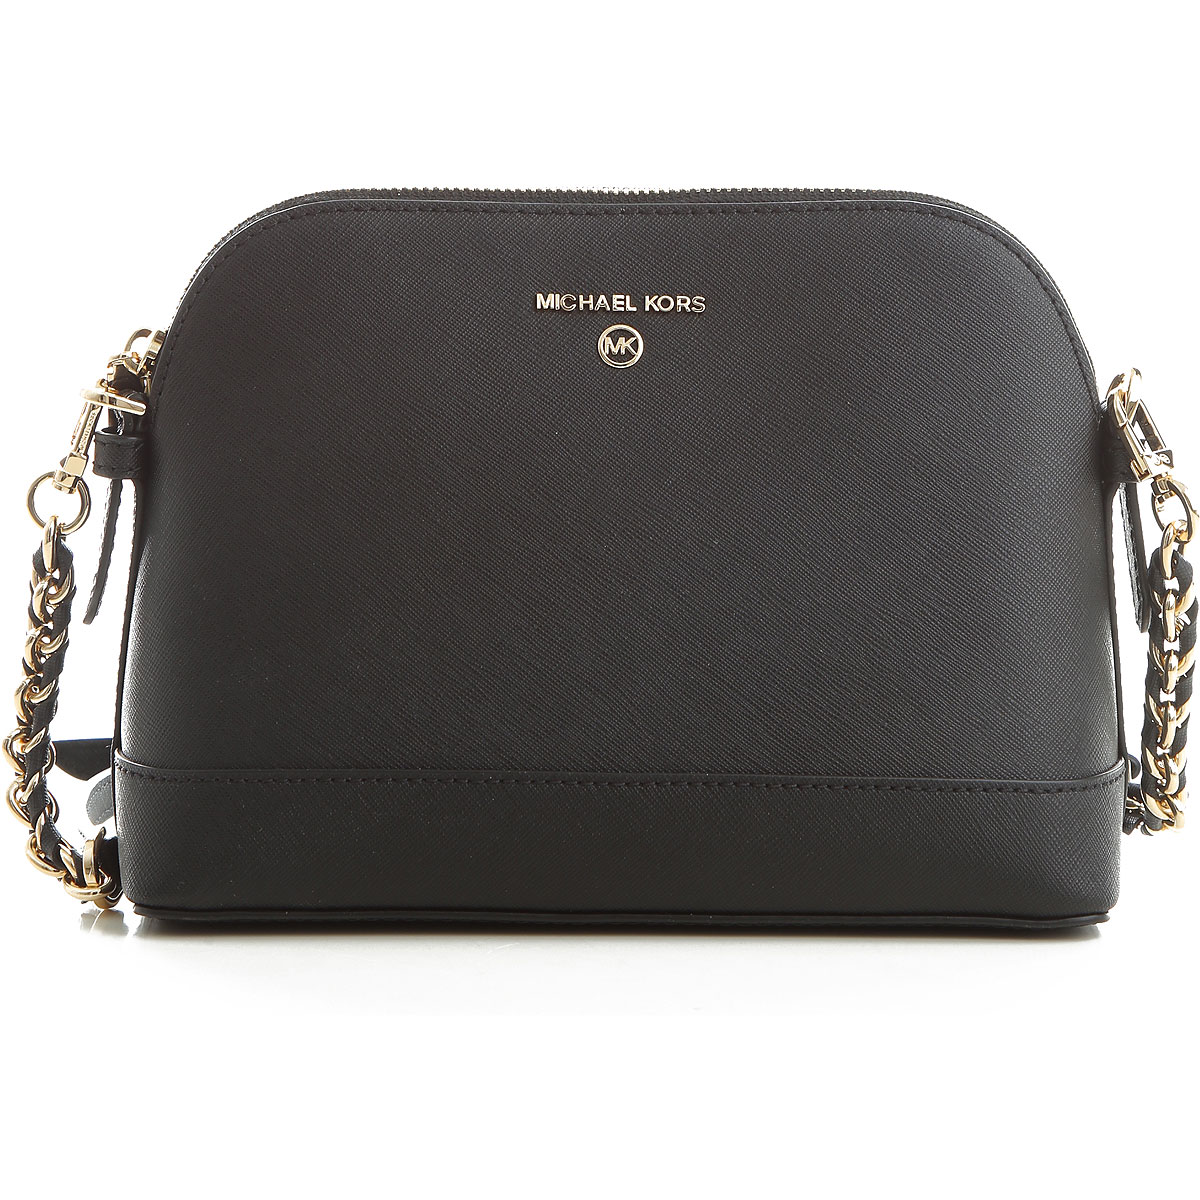 Handbags Michael Kors, Style code: 32t1gt9c3l-001-